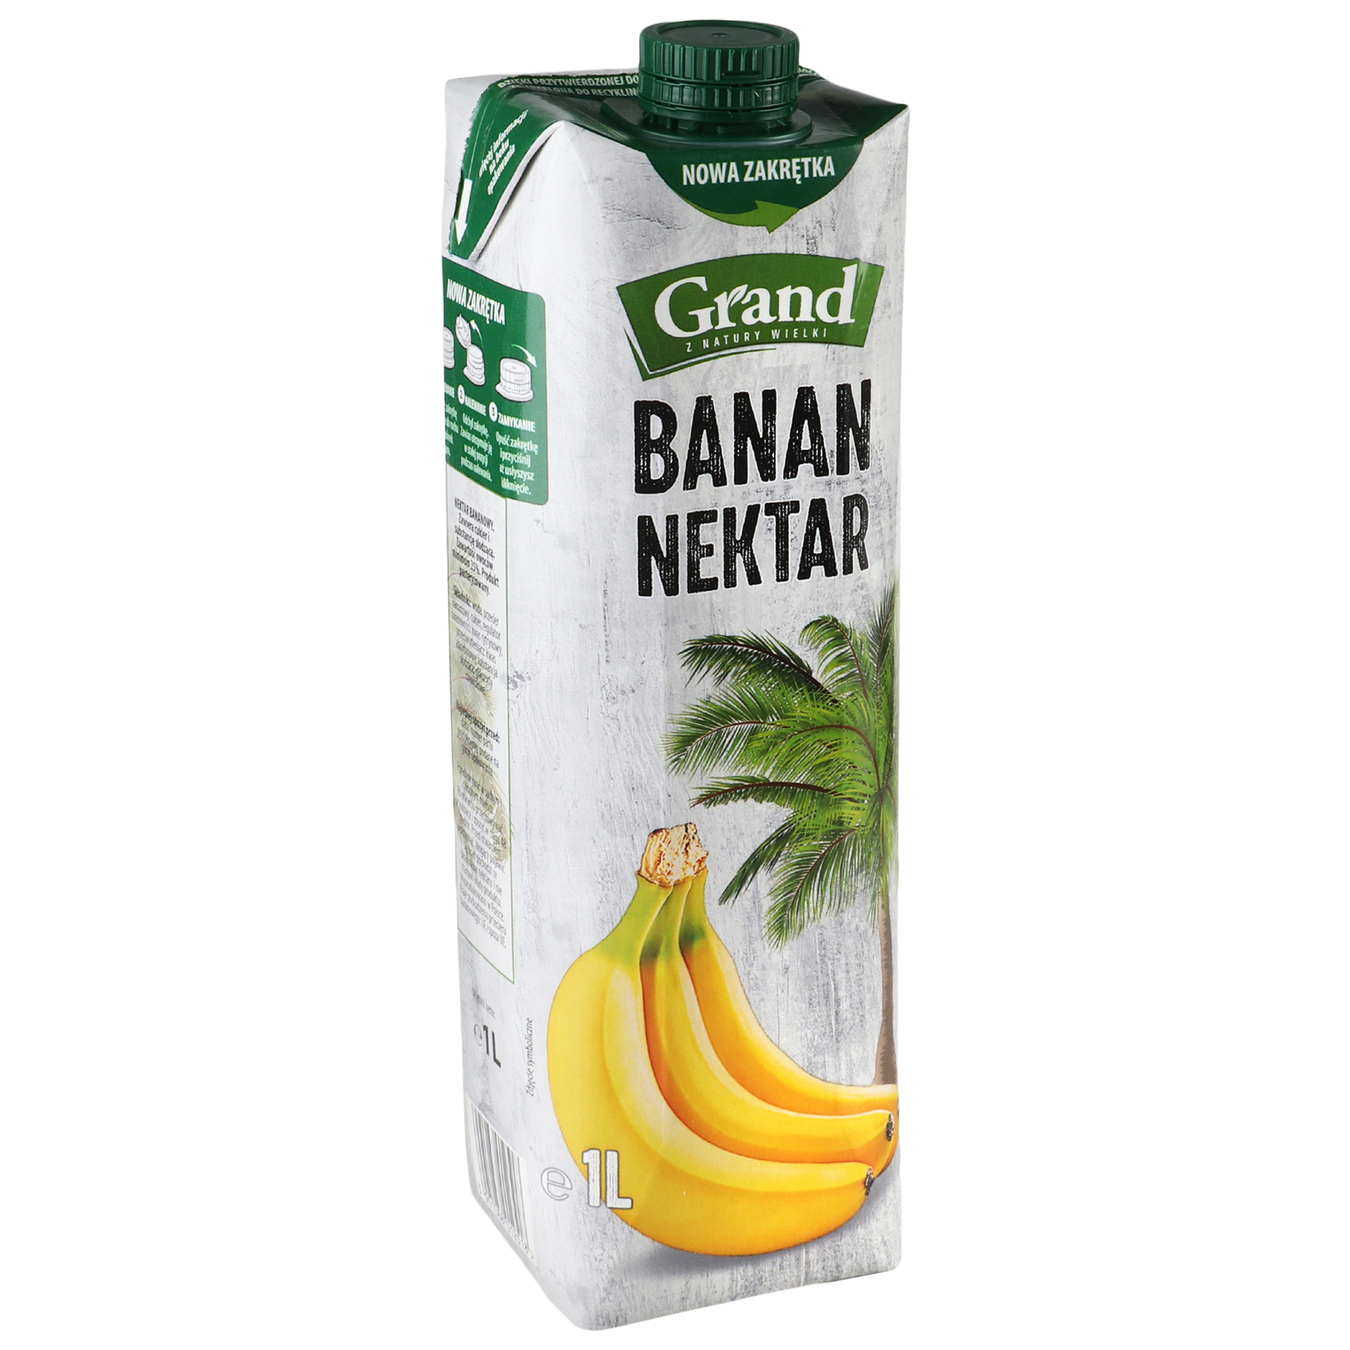 Nectar Grand banana 1 liter 2